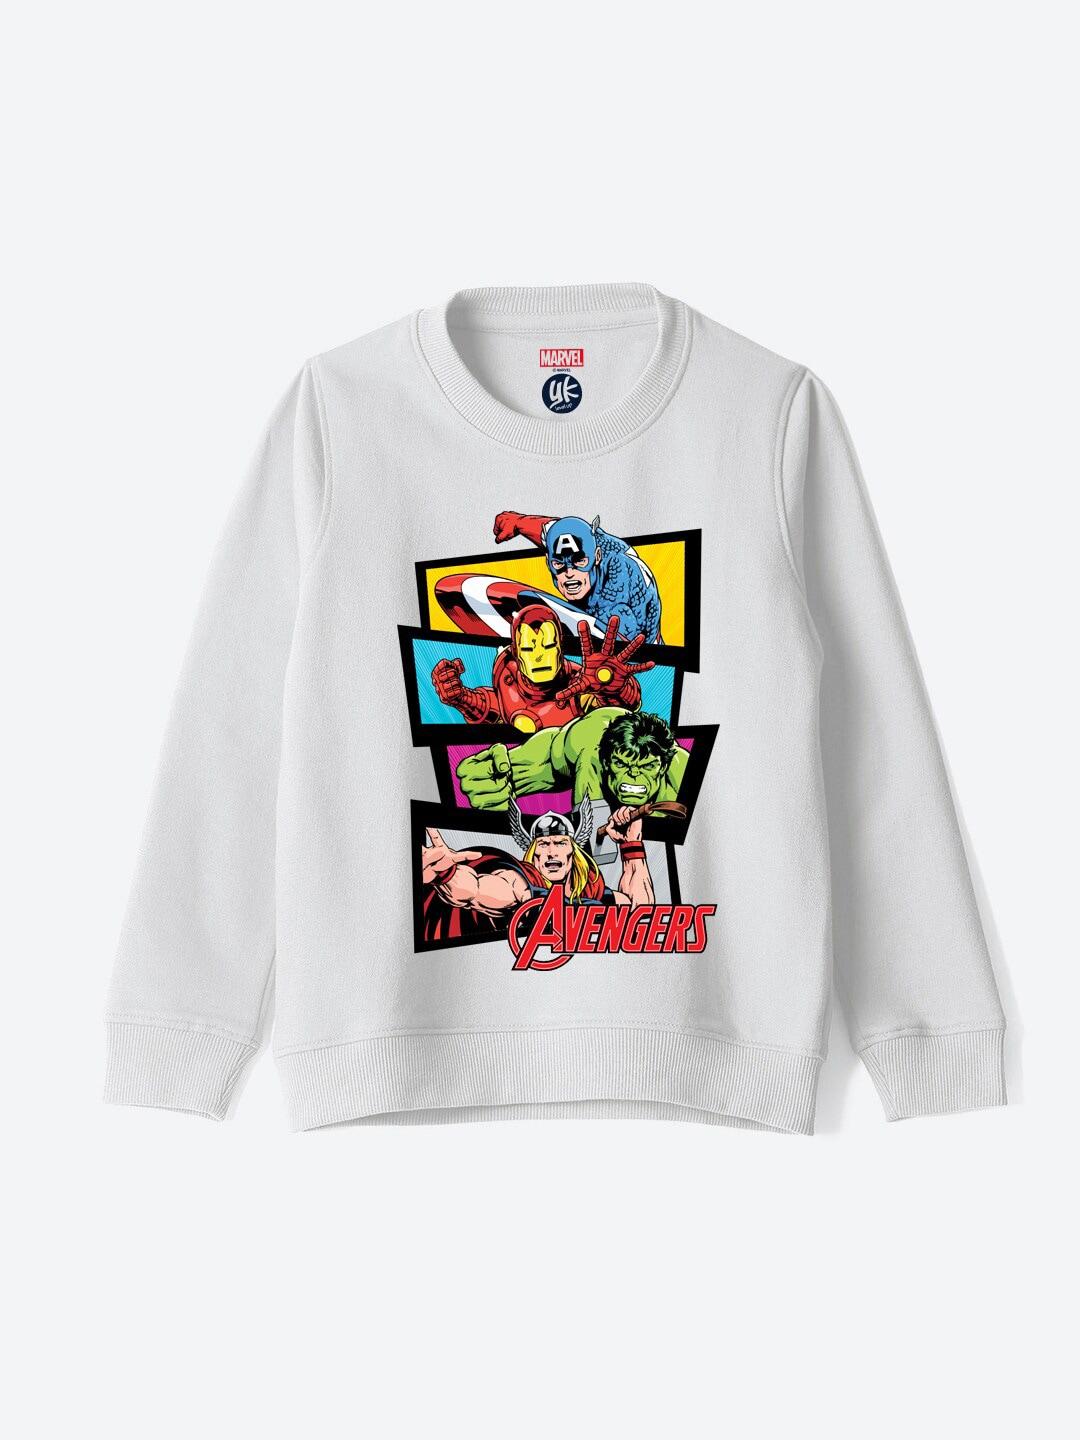 yk-marvel-boys-avengers-printed-cotton-sweatshirt